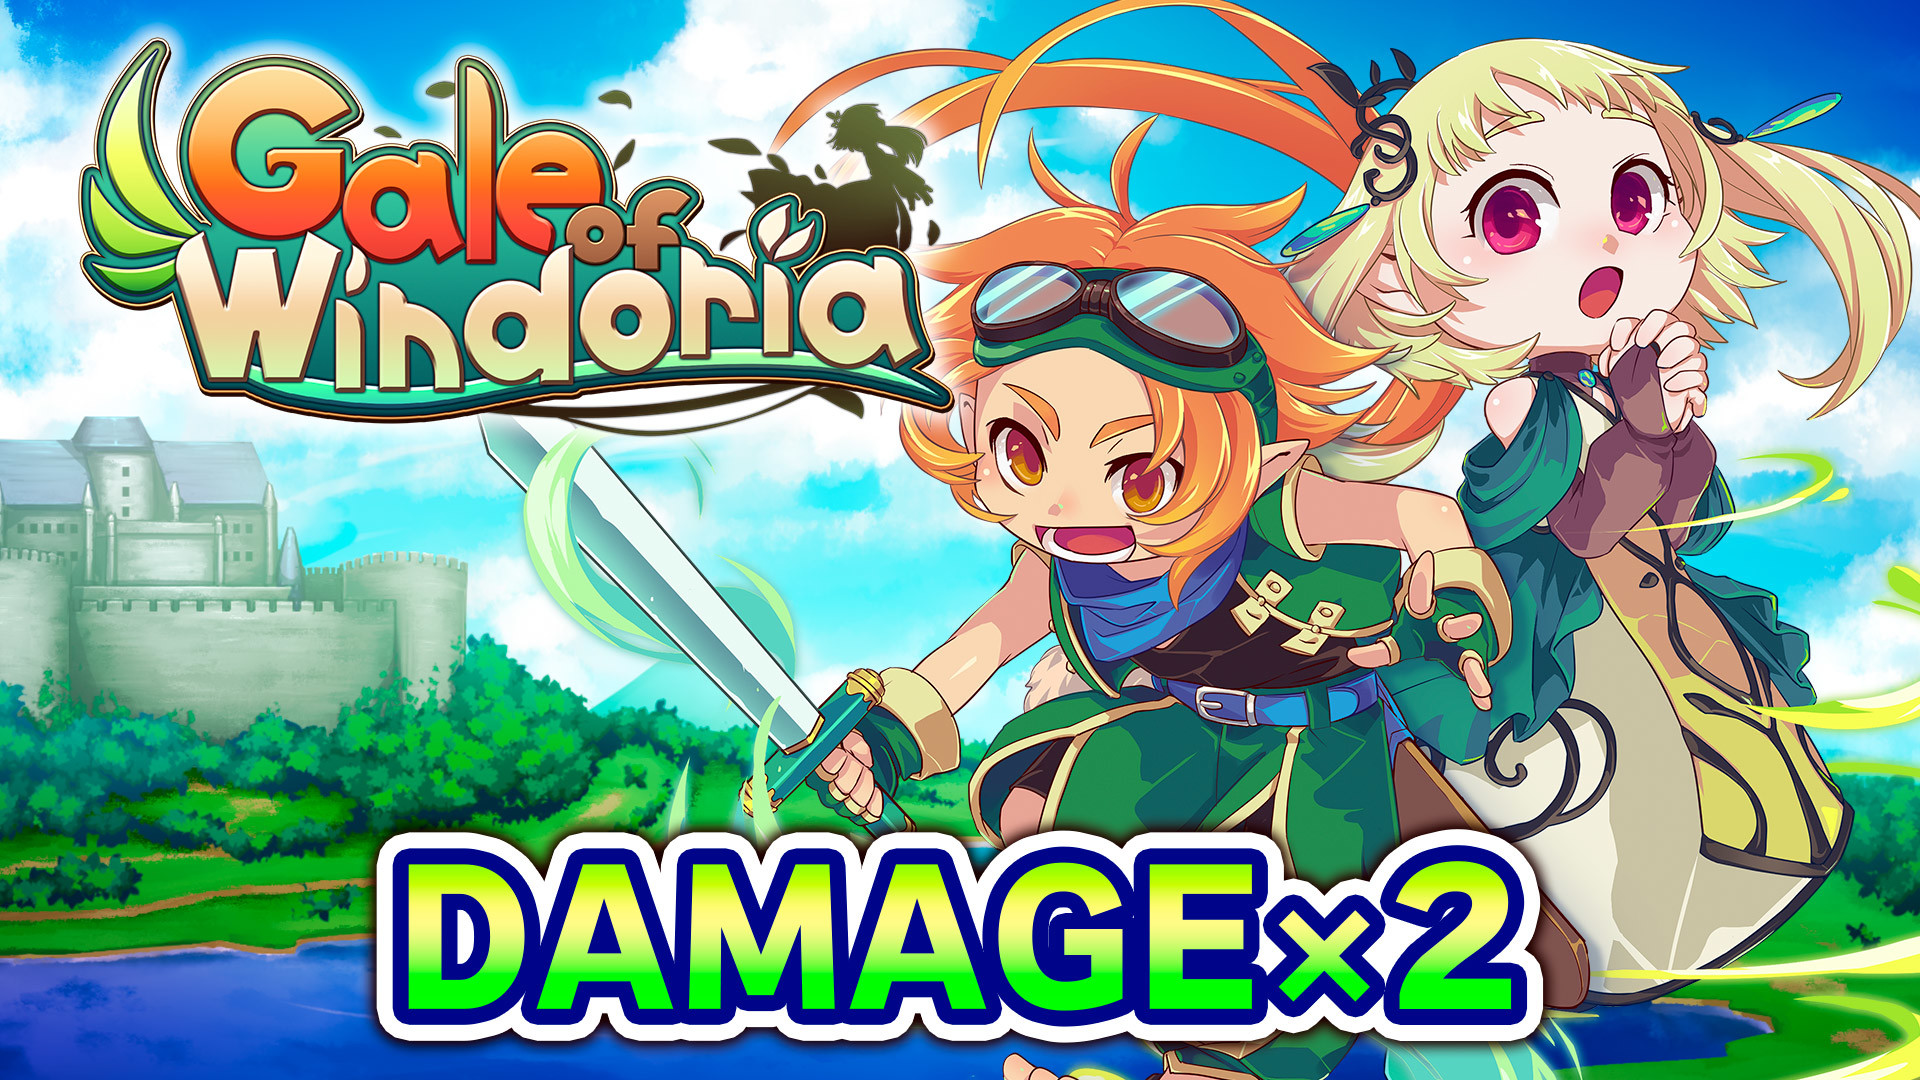 Damage x2 - Gale of Windoria Featured Screenshot #1